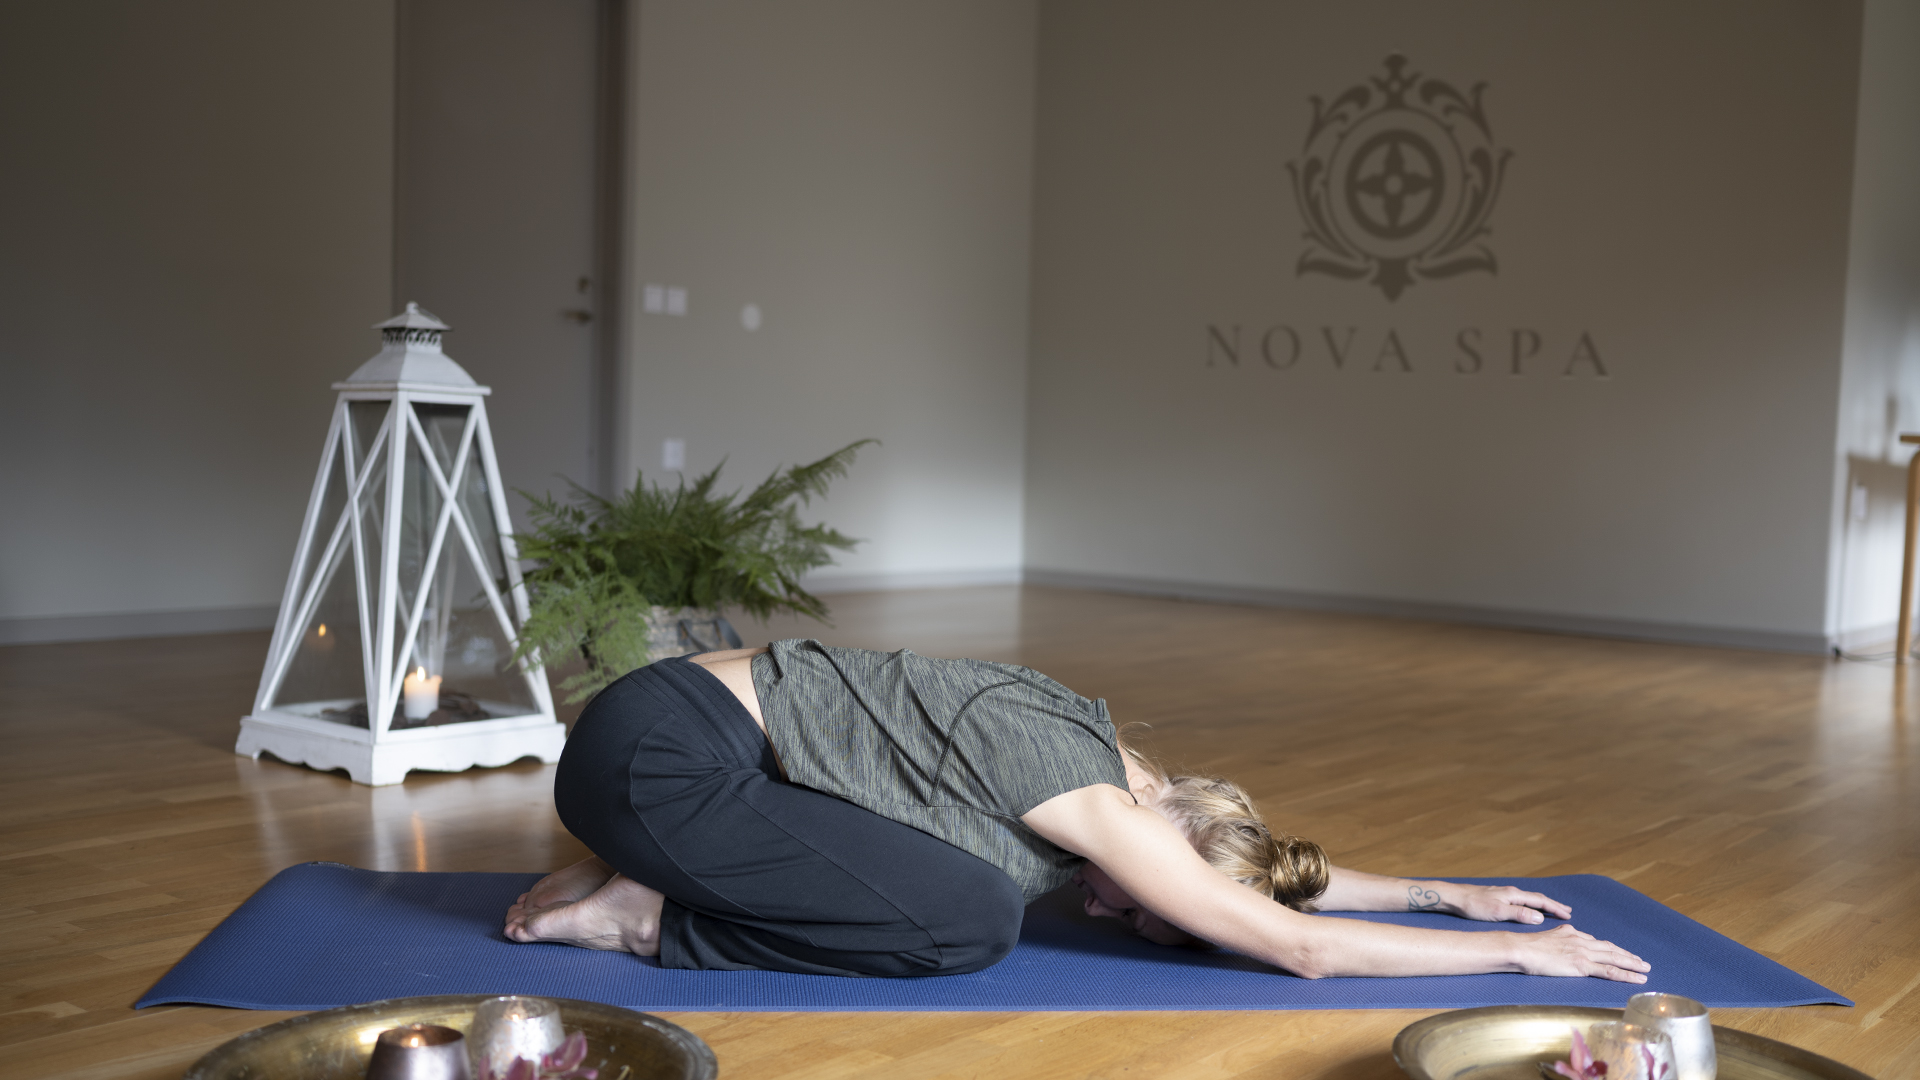 Nova Spa yoga 02 lr